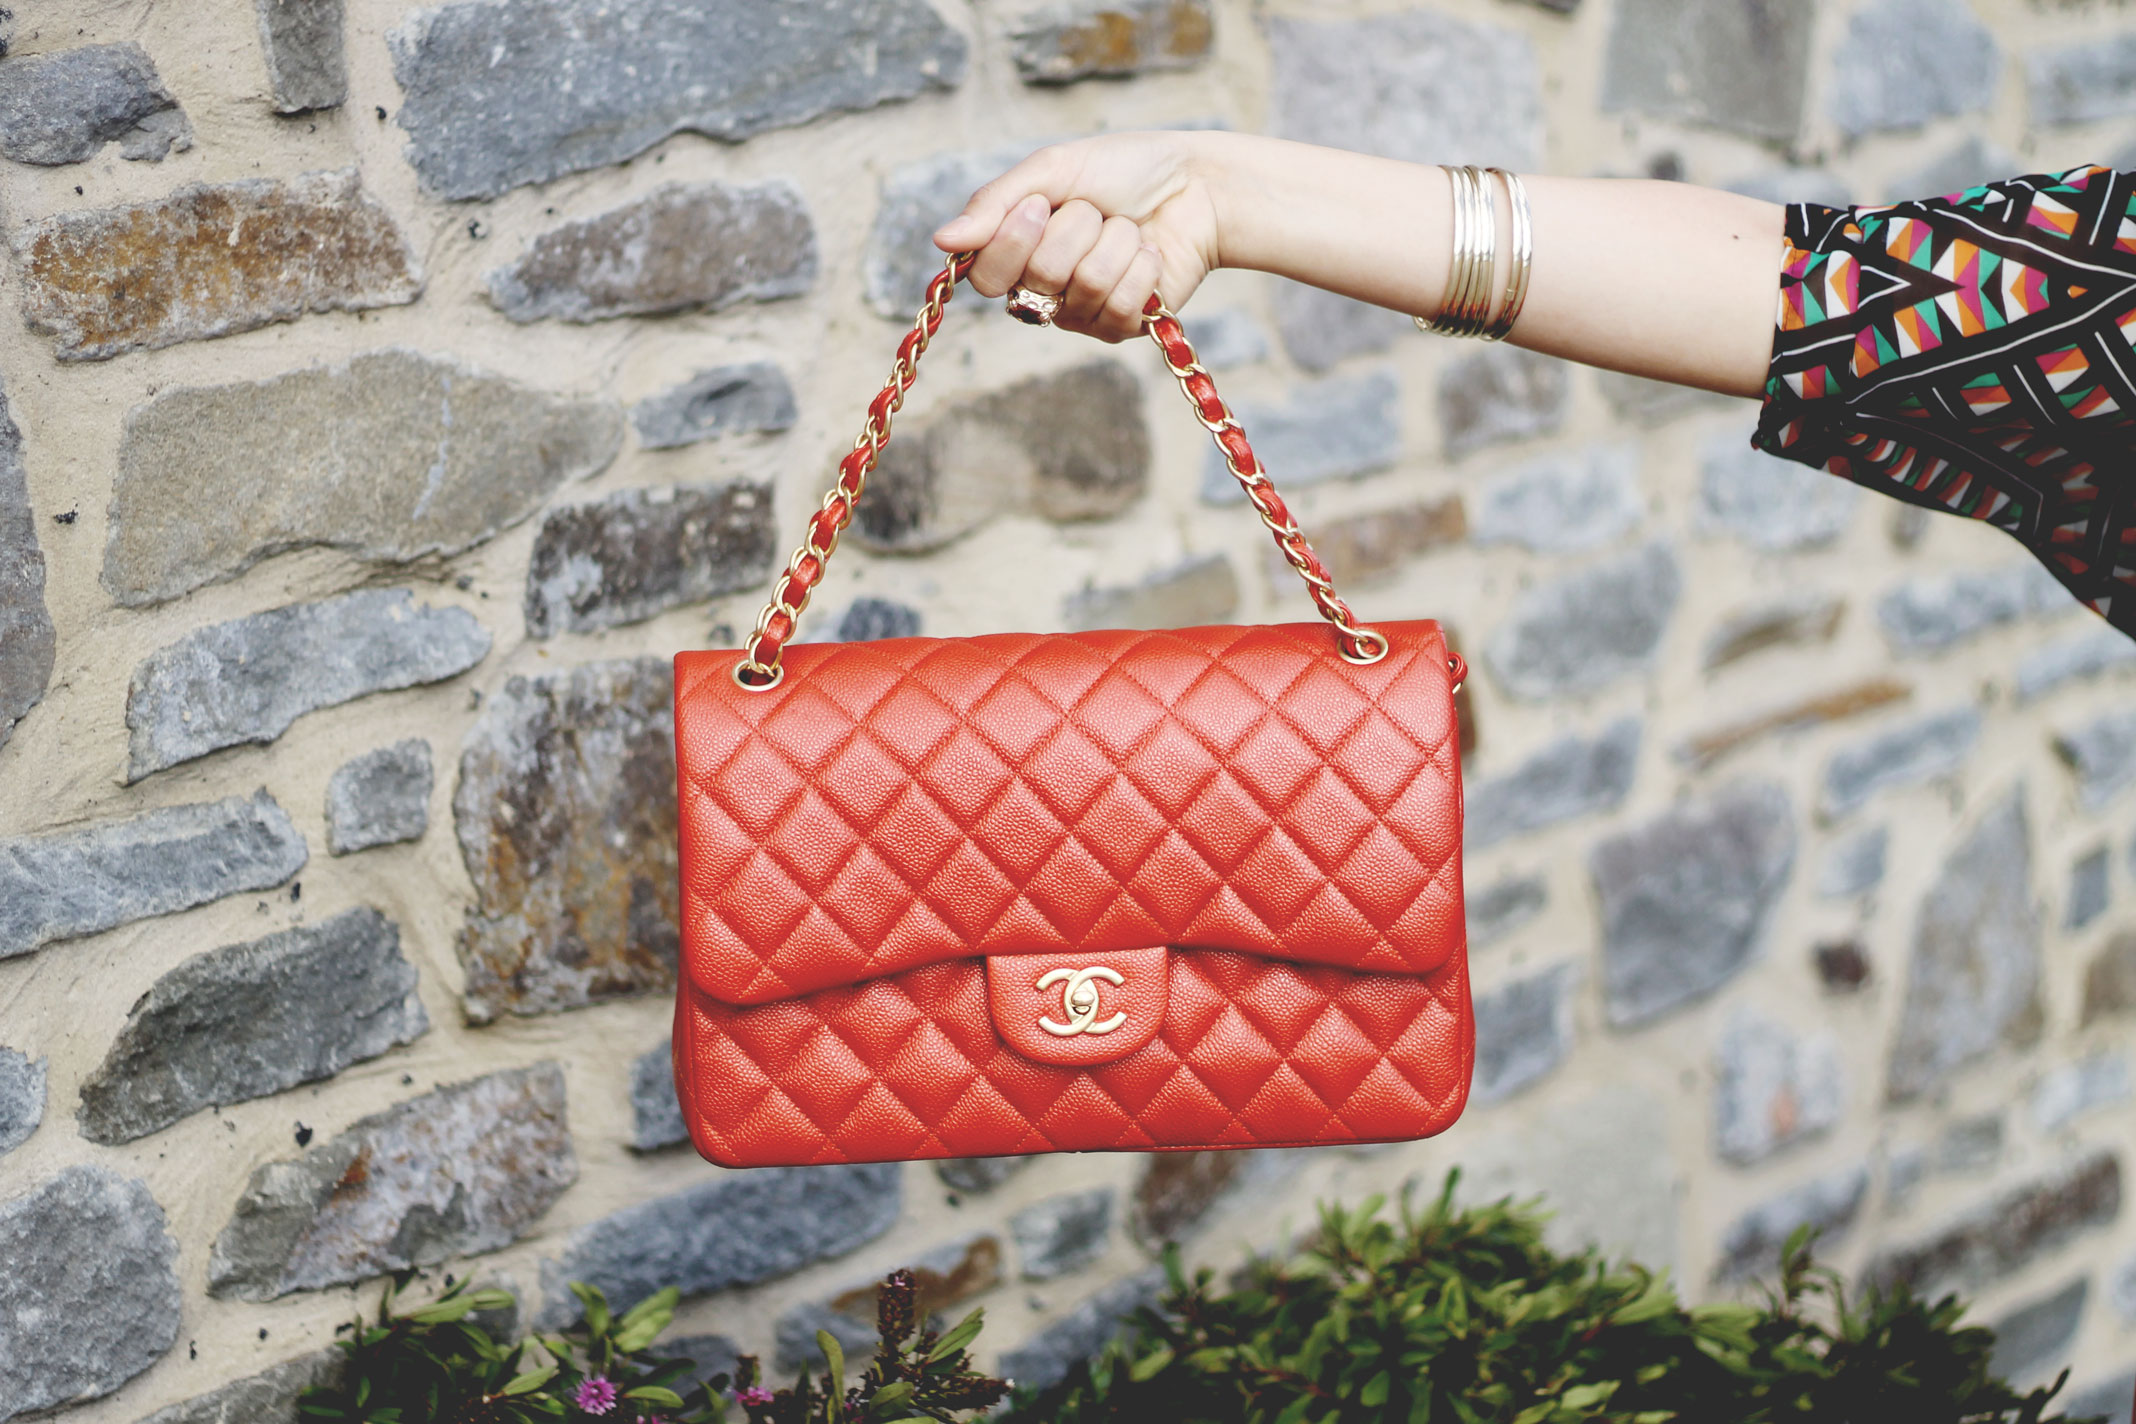 STYLEAT30 Fashion Blog - Chanel Bag - 01